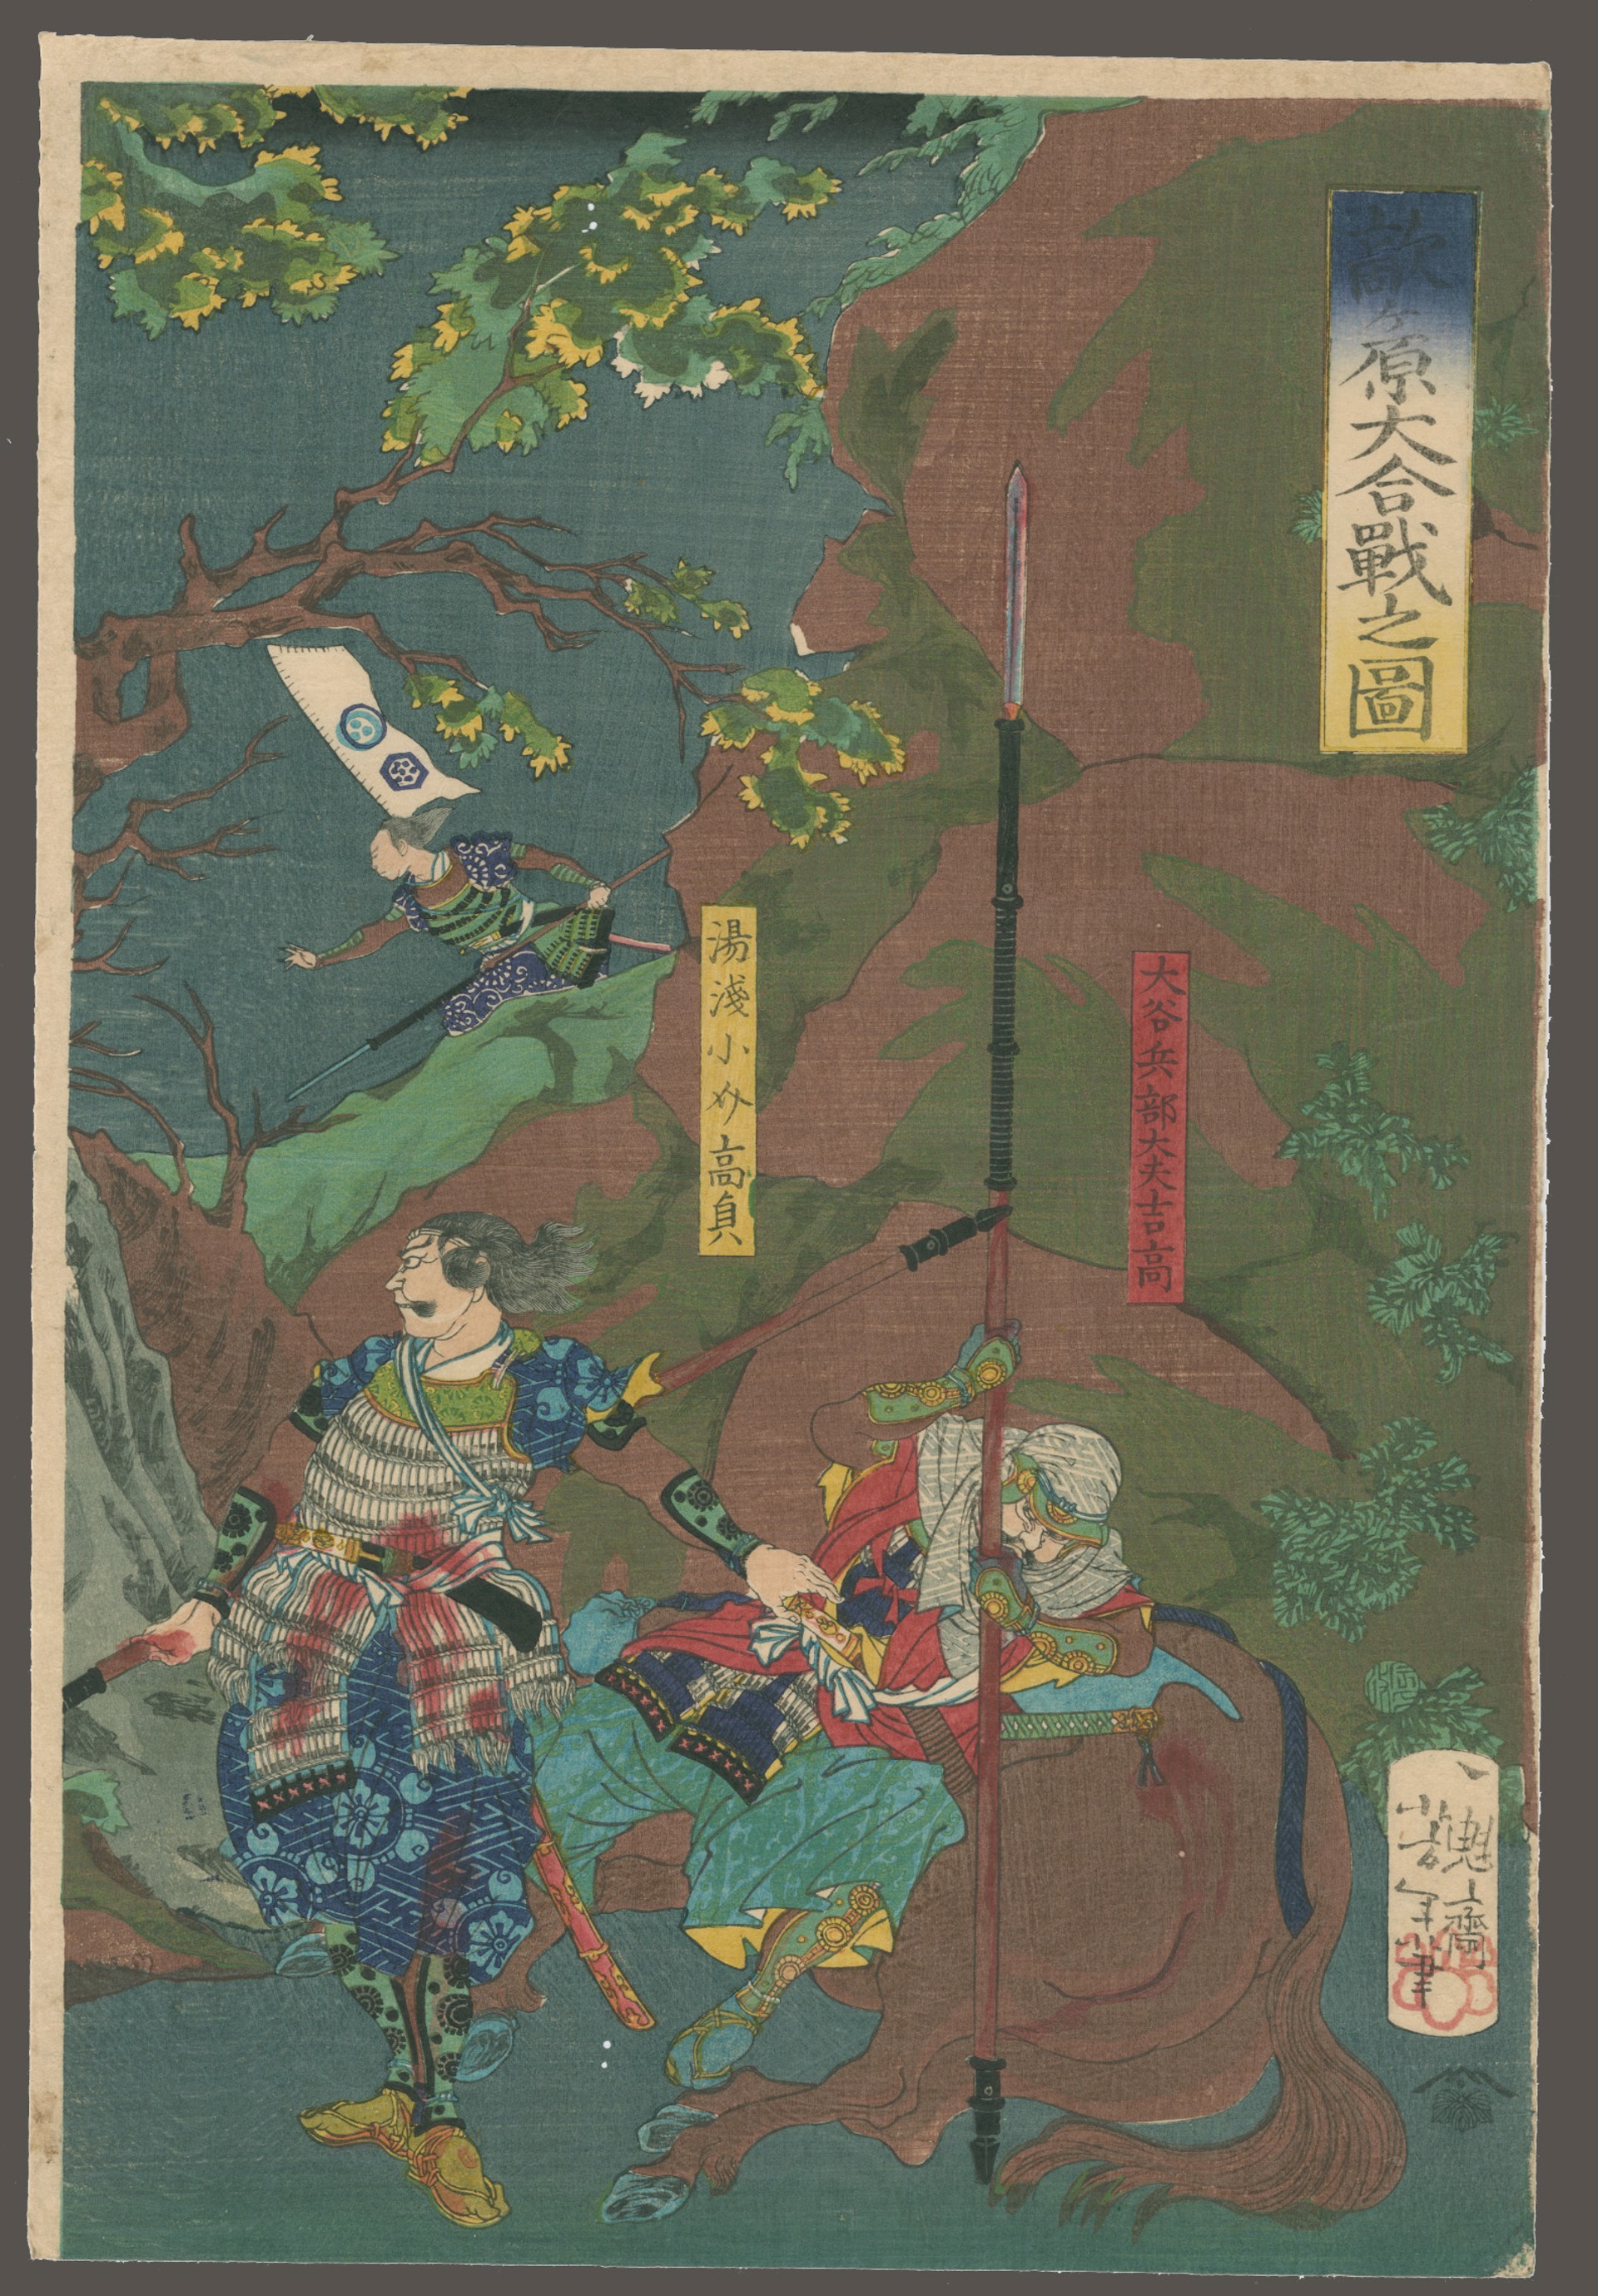 The Great Batlle of Awazugahara by Yoshitoshi